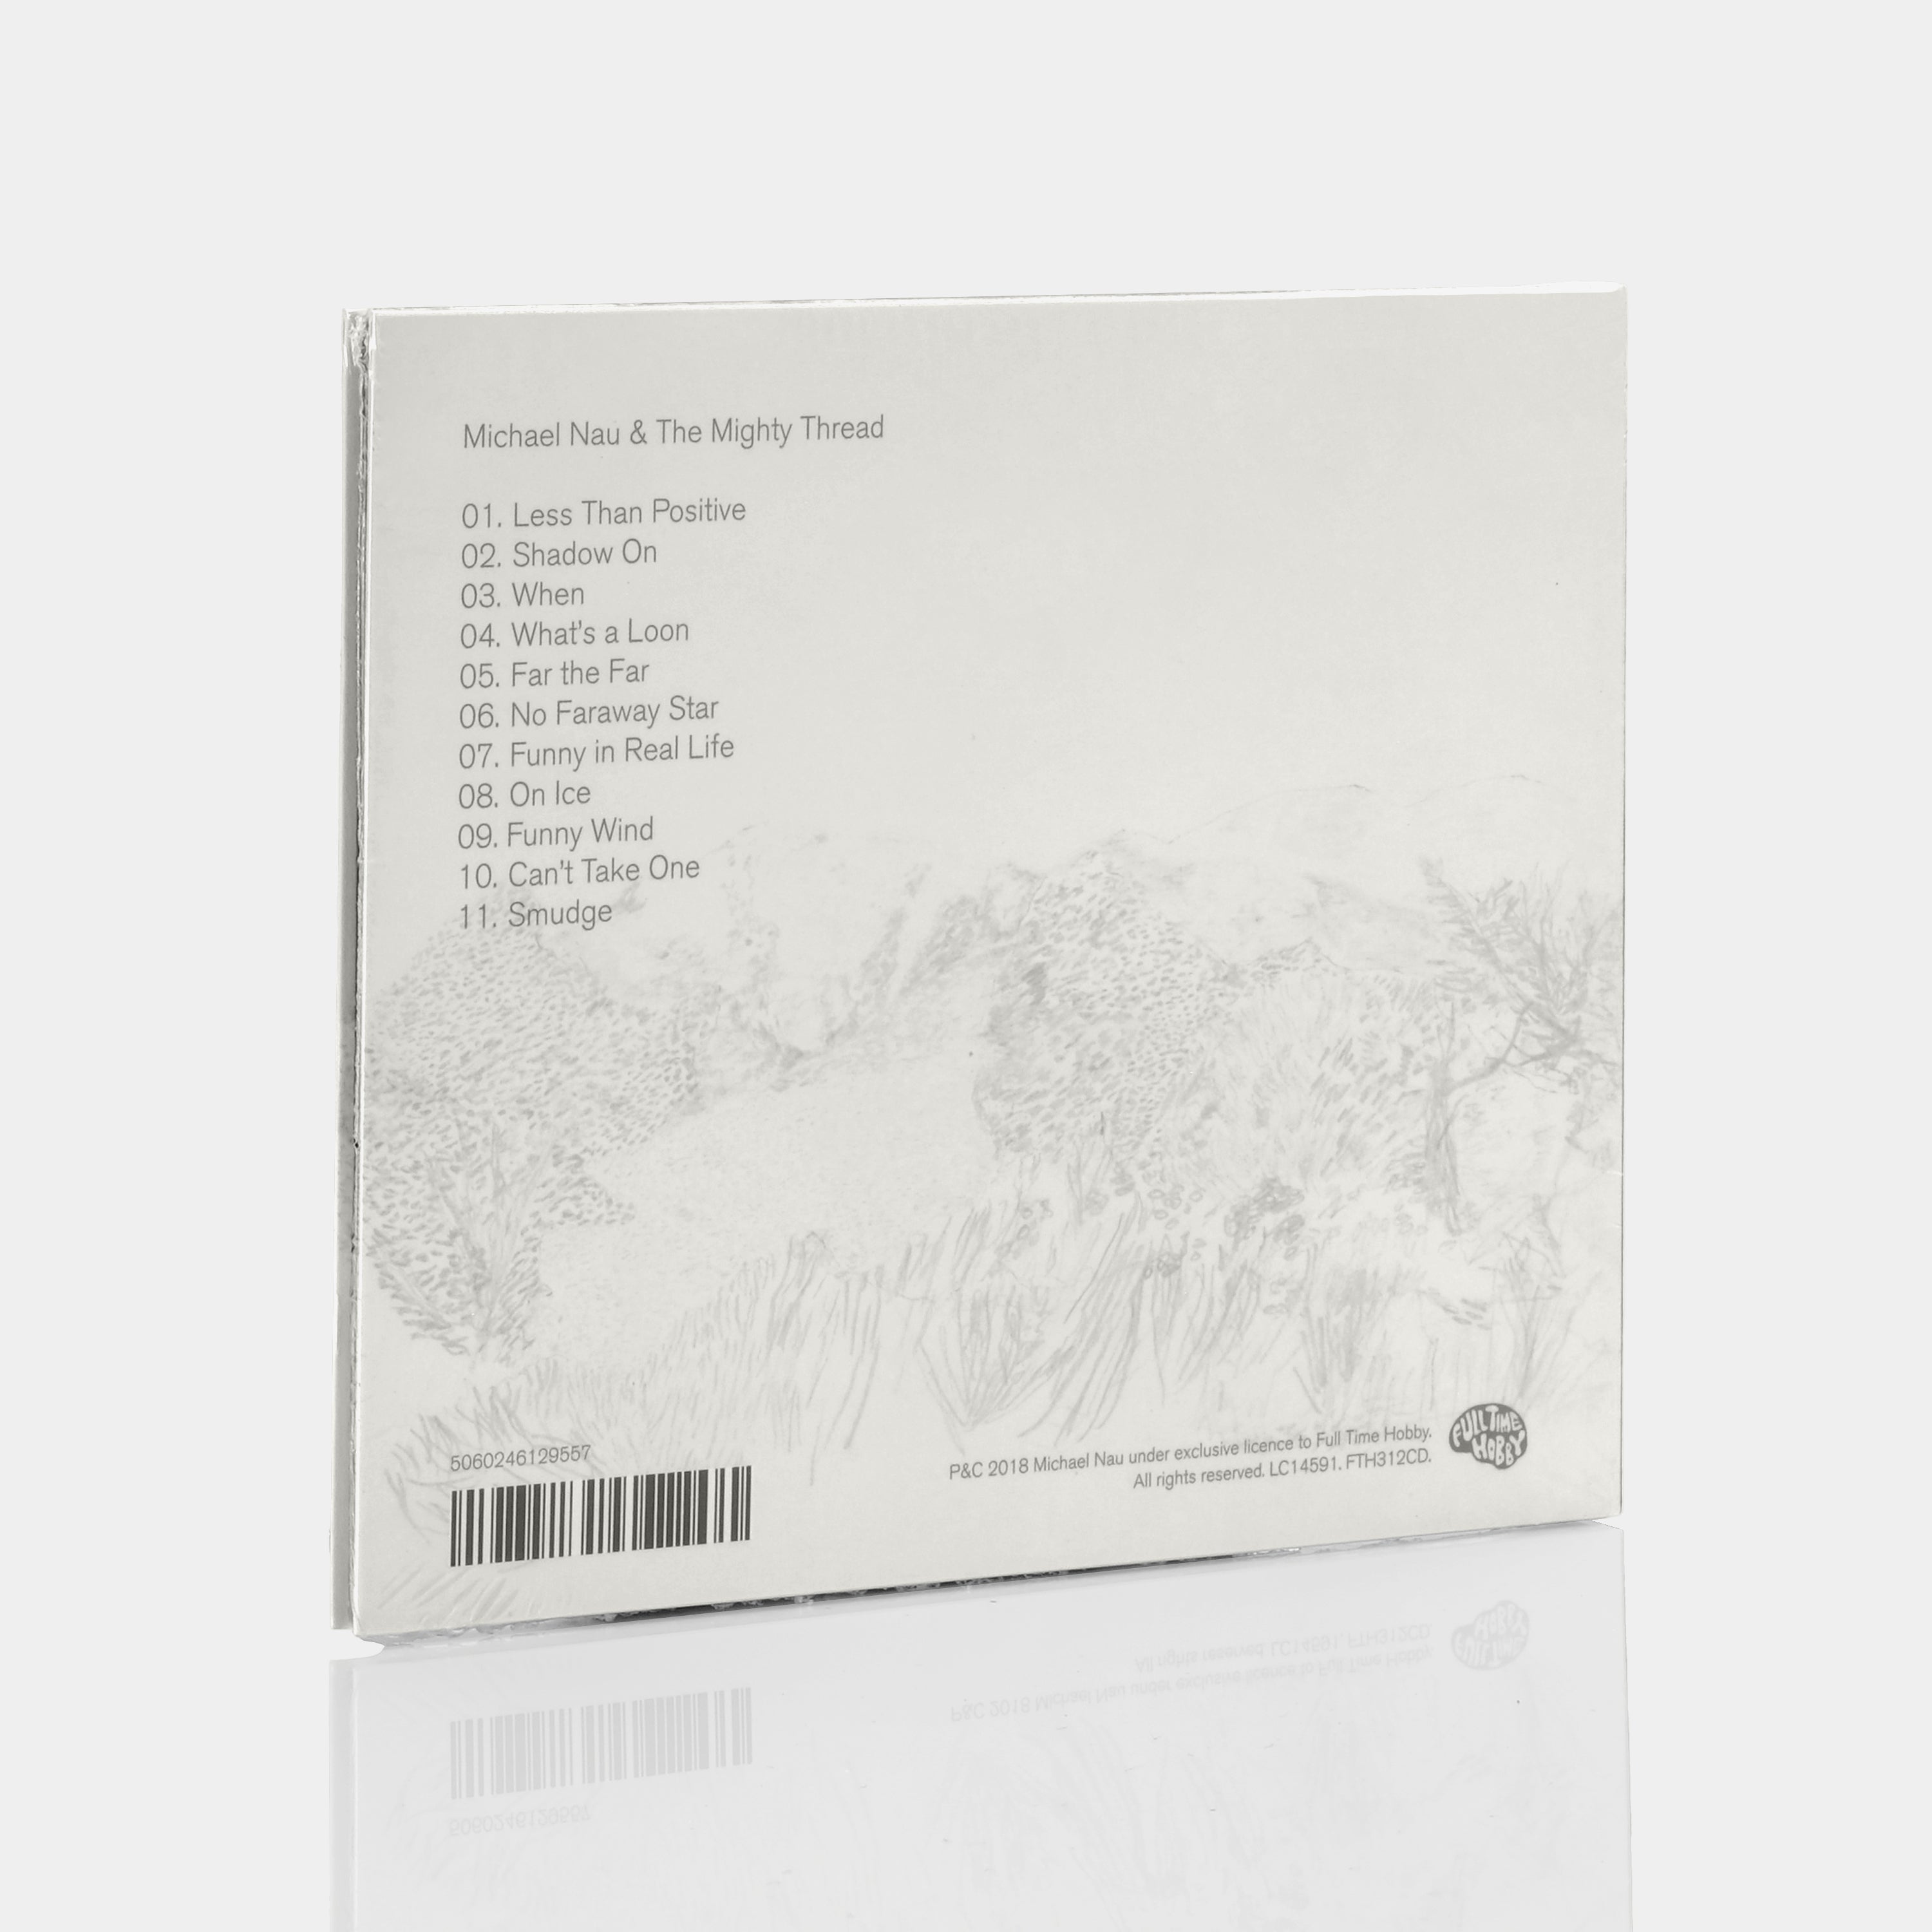 Michael Nau & The Mighty Thread - Michael Nau & The Mighty Thread CD